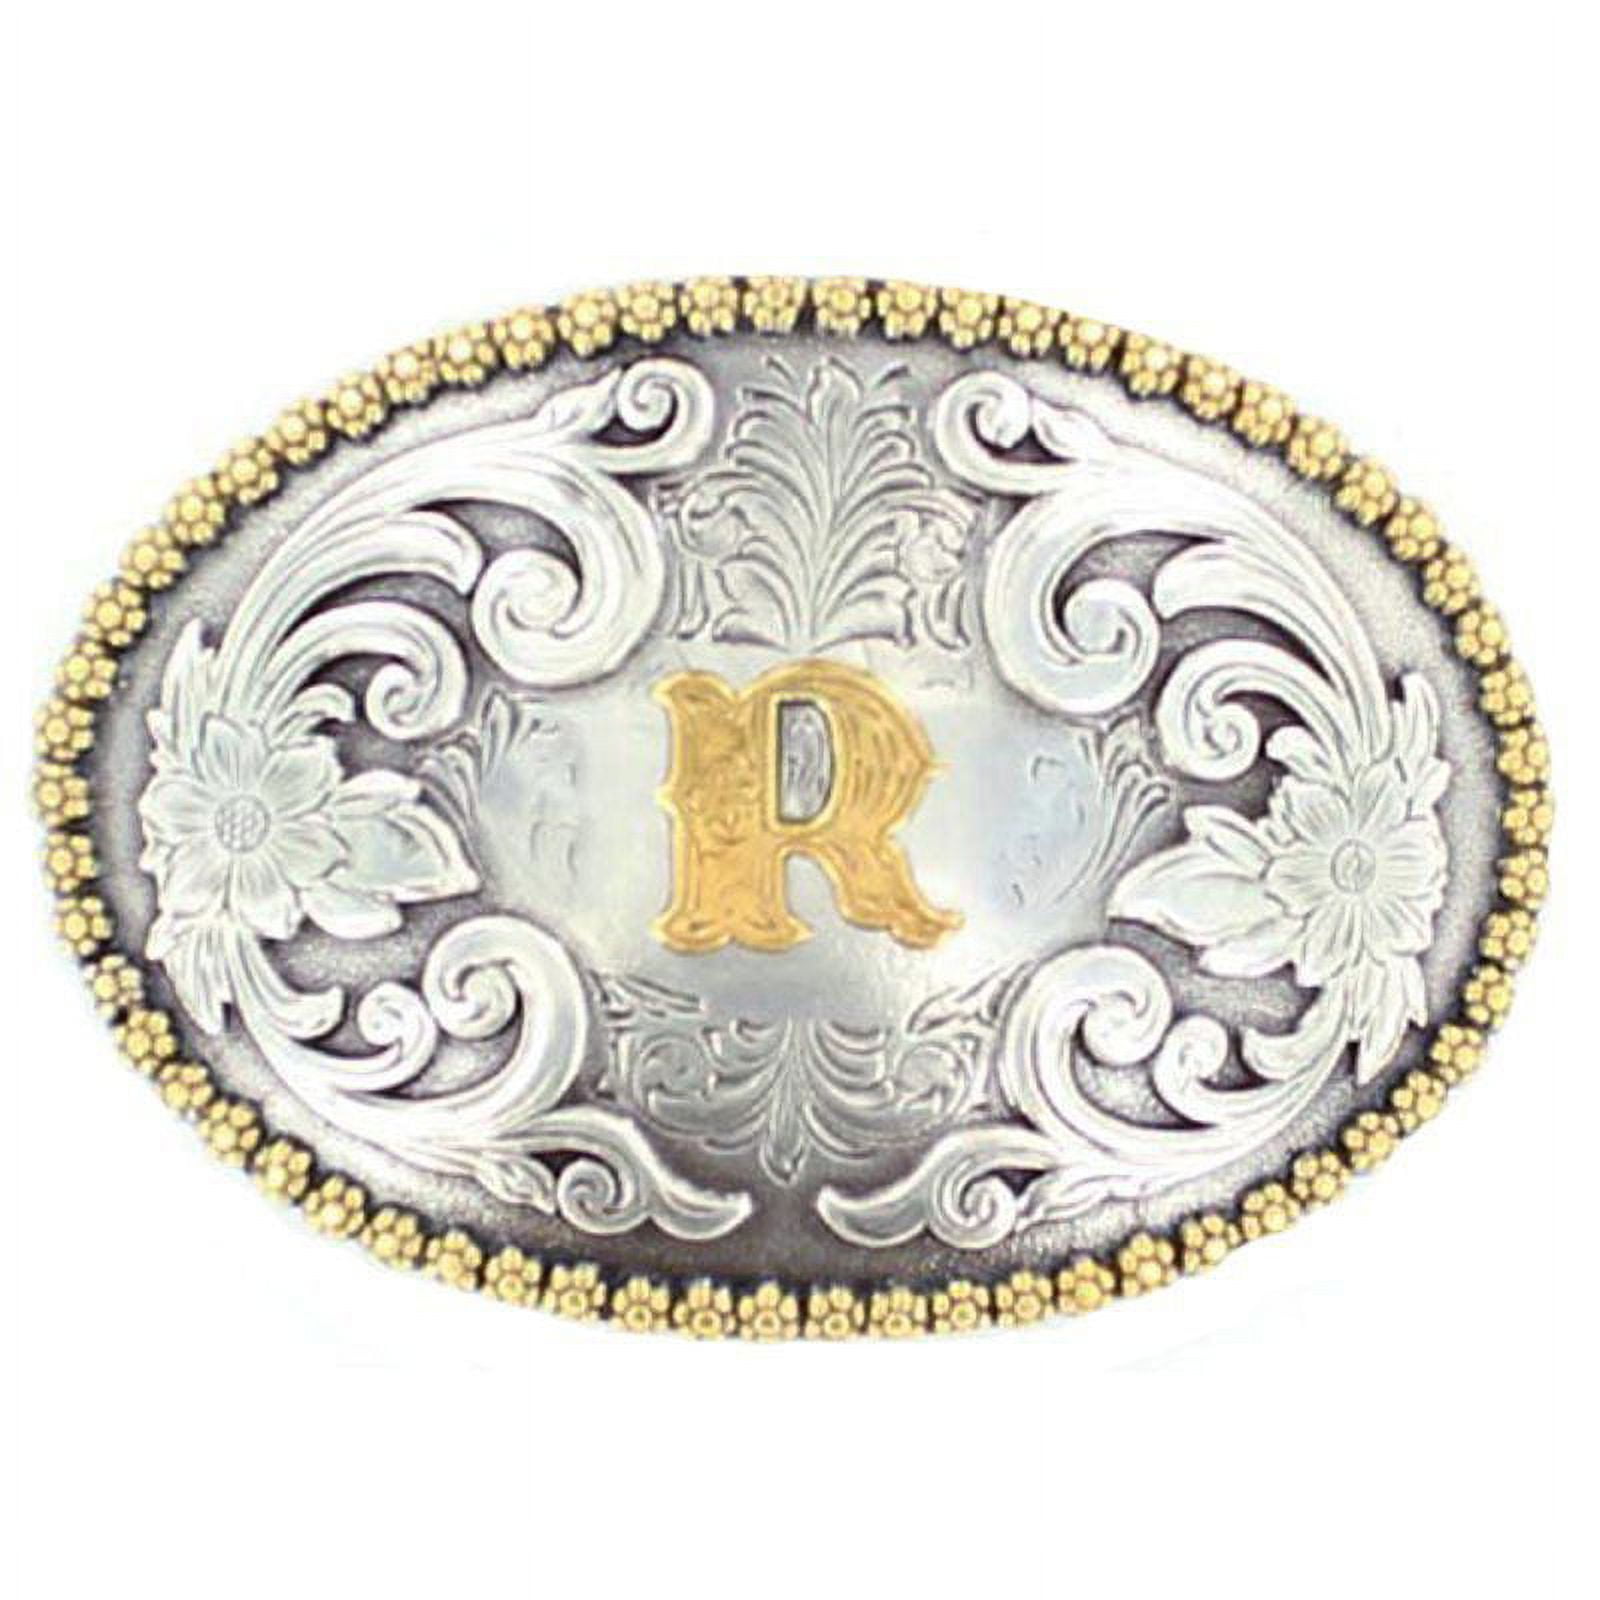 American Eagle Metal Belt Buckle Western Cowboy Silver Gold finish Patriotic